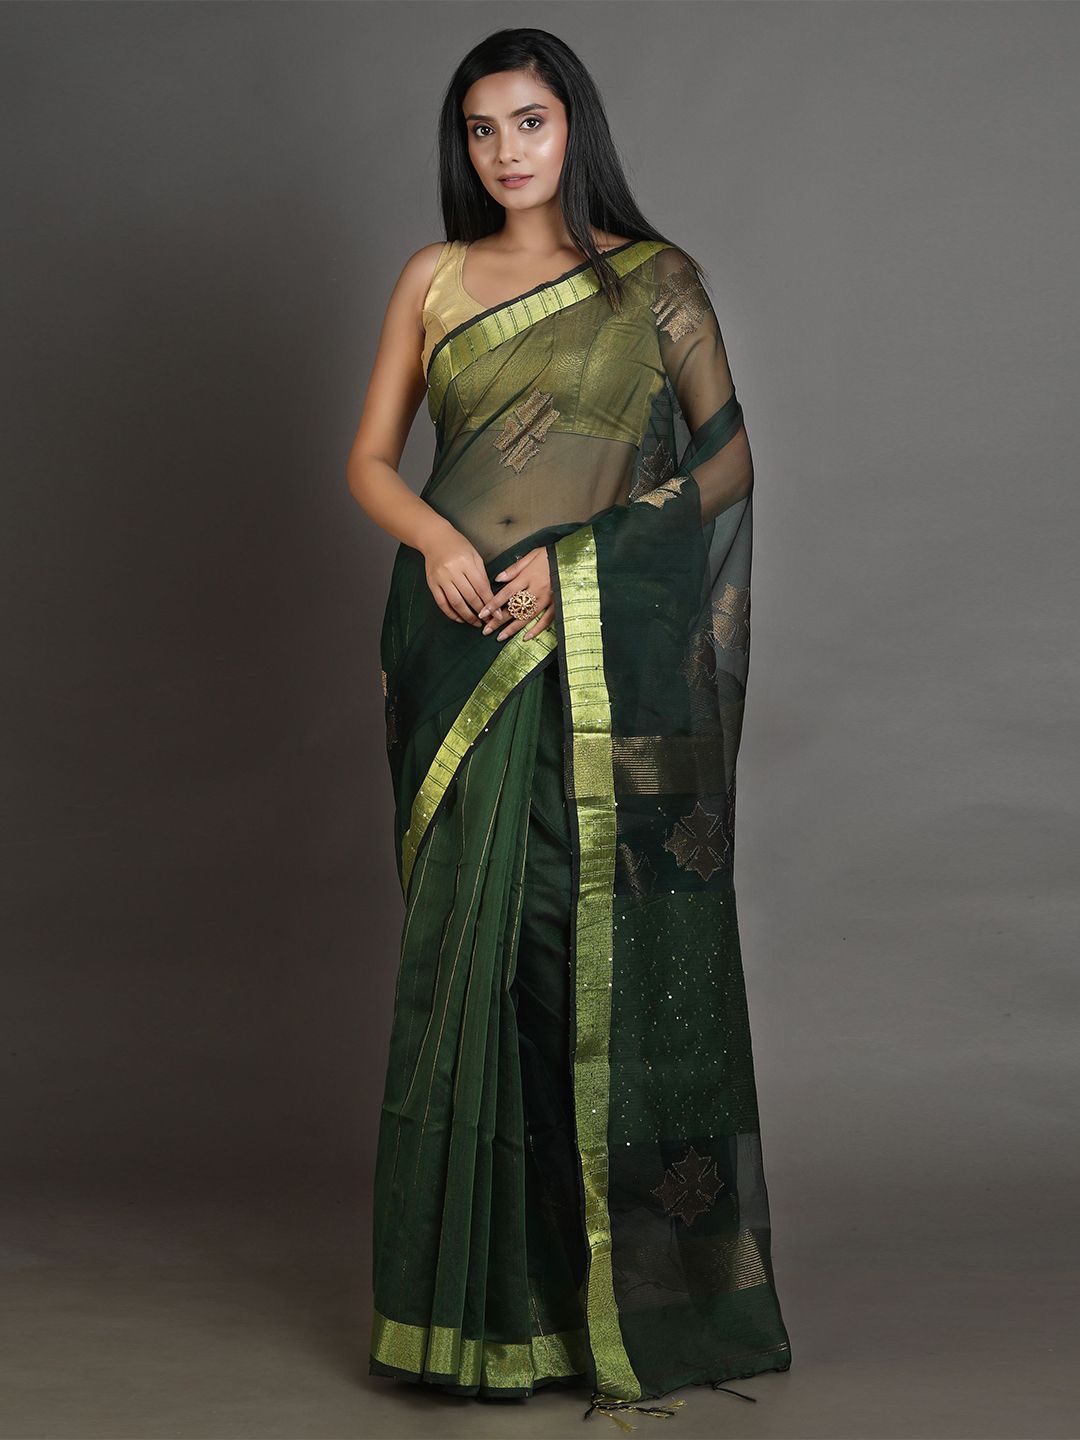 Arhi Green & Gold-Toned Handwoven Pure Silk Saree Price in India